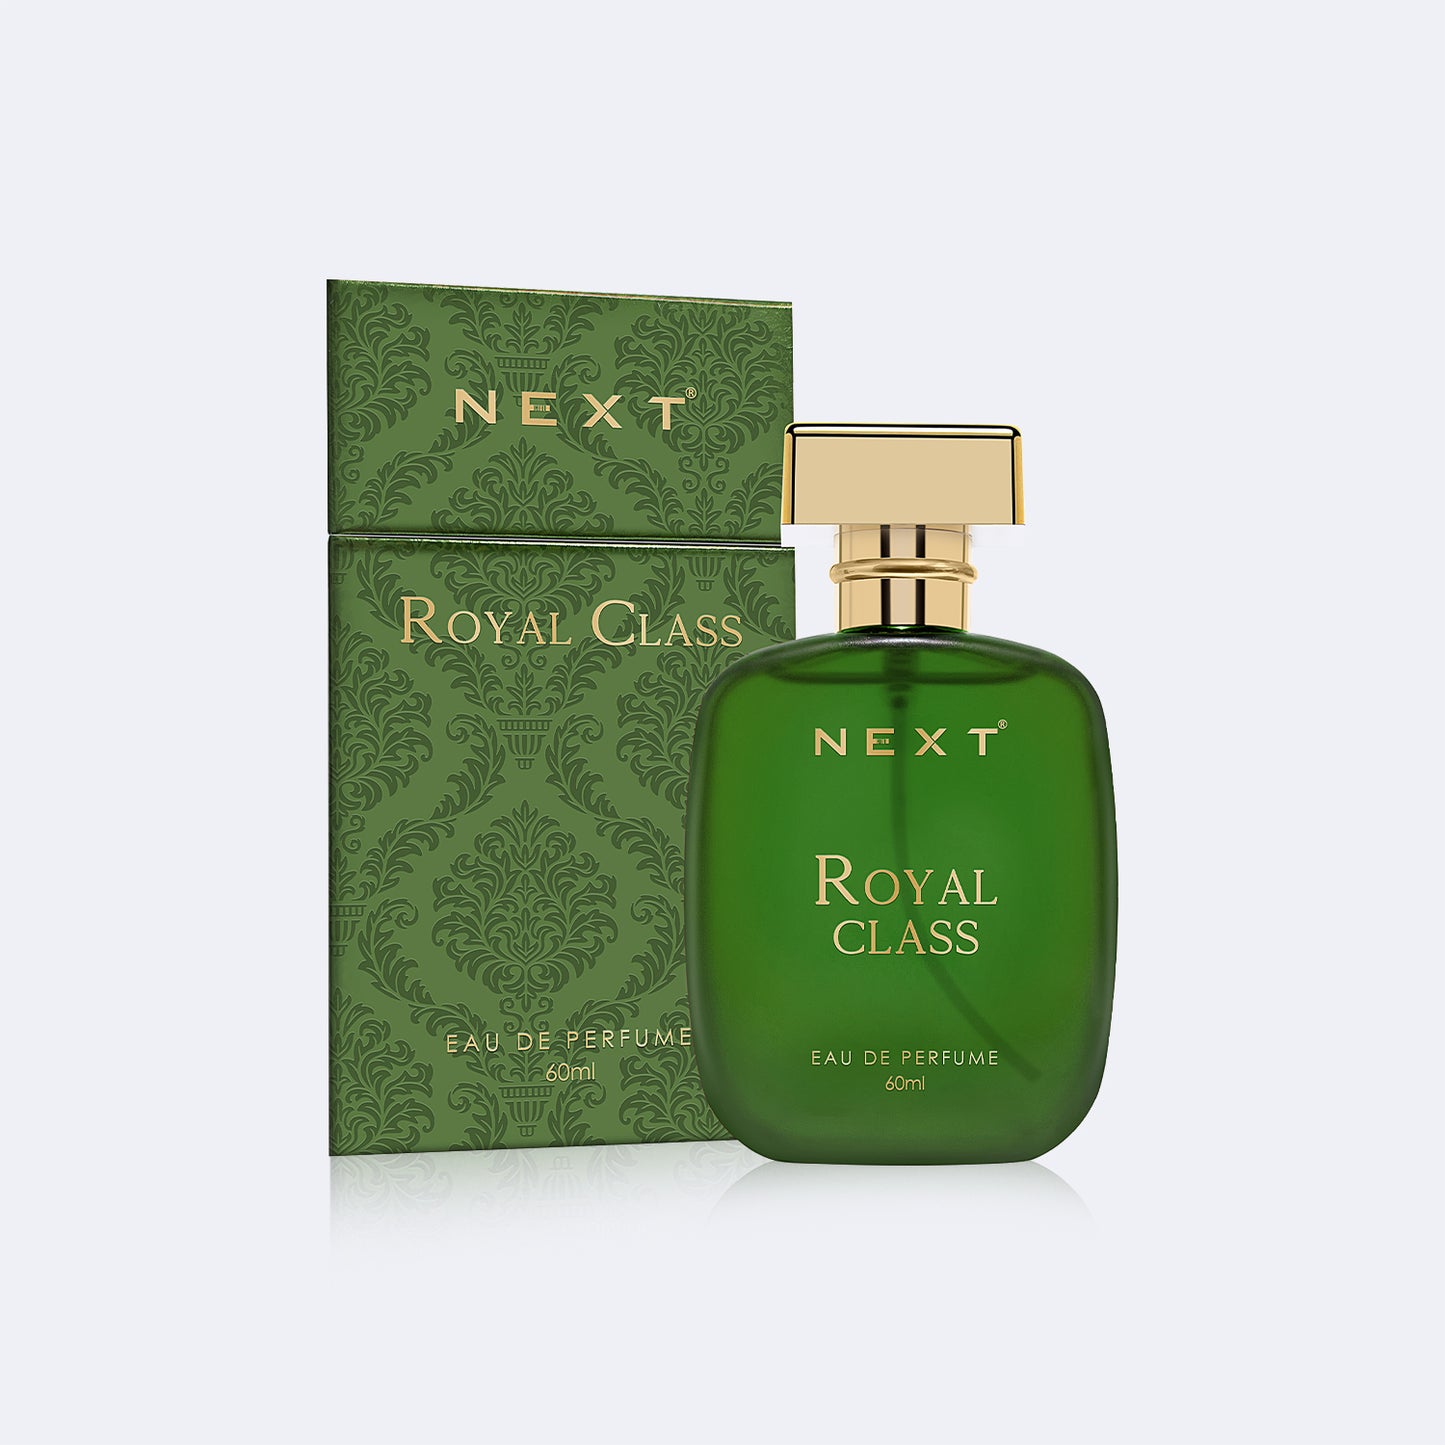 NEXT Royal Class Long Lasting Eau de Perfume for Men - 60ml